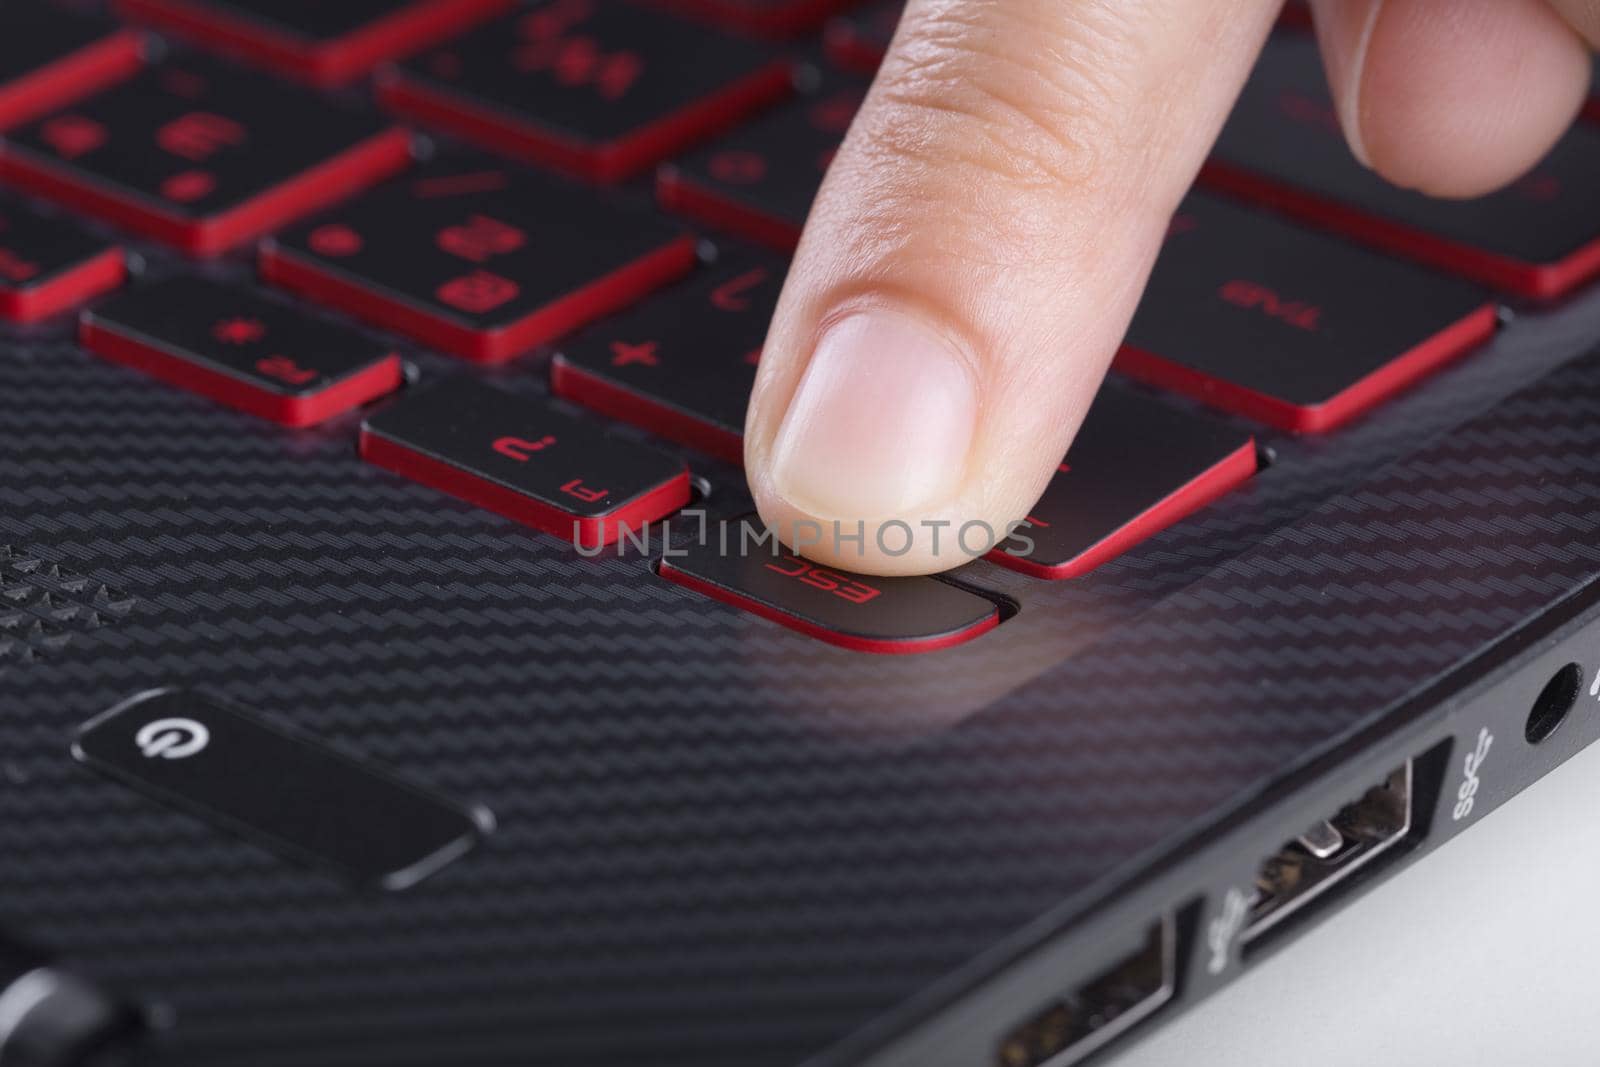 finger pushing esc button on laptop keyboard by geargodz